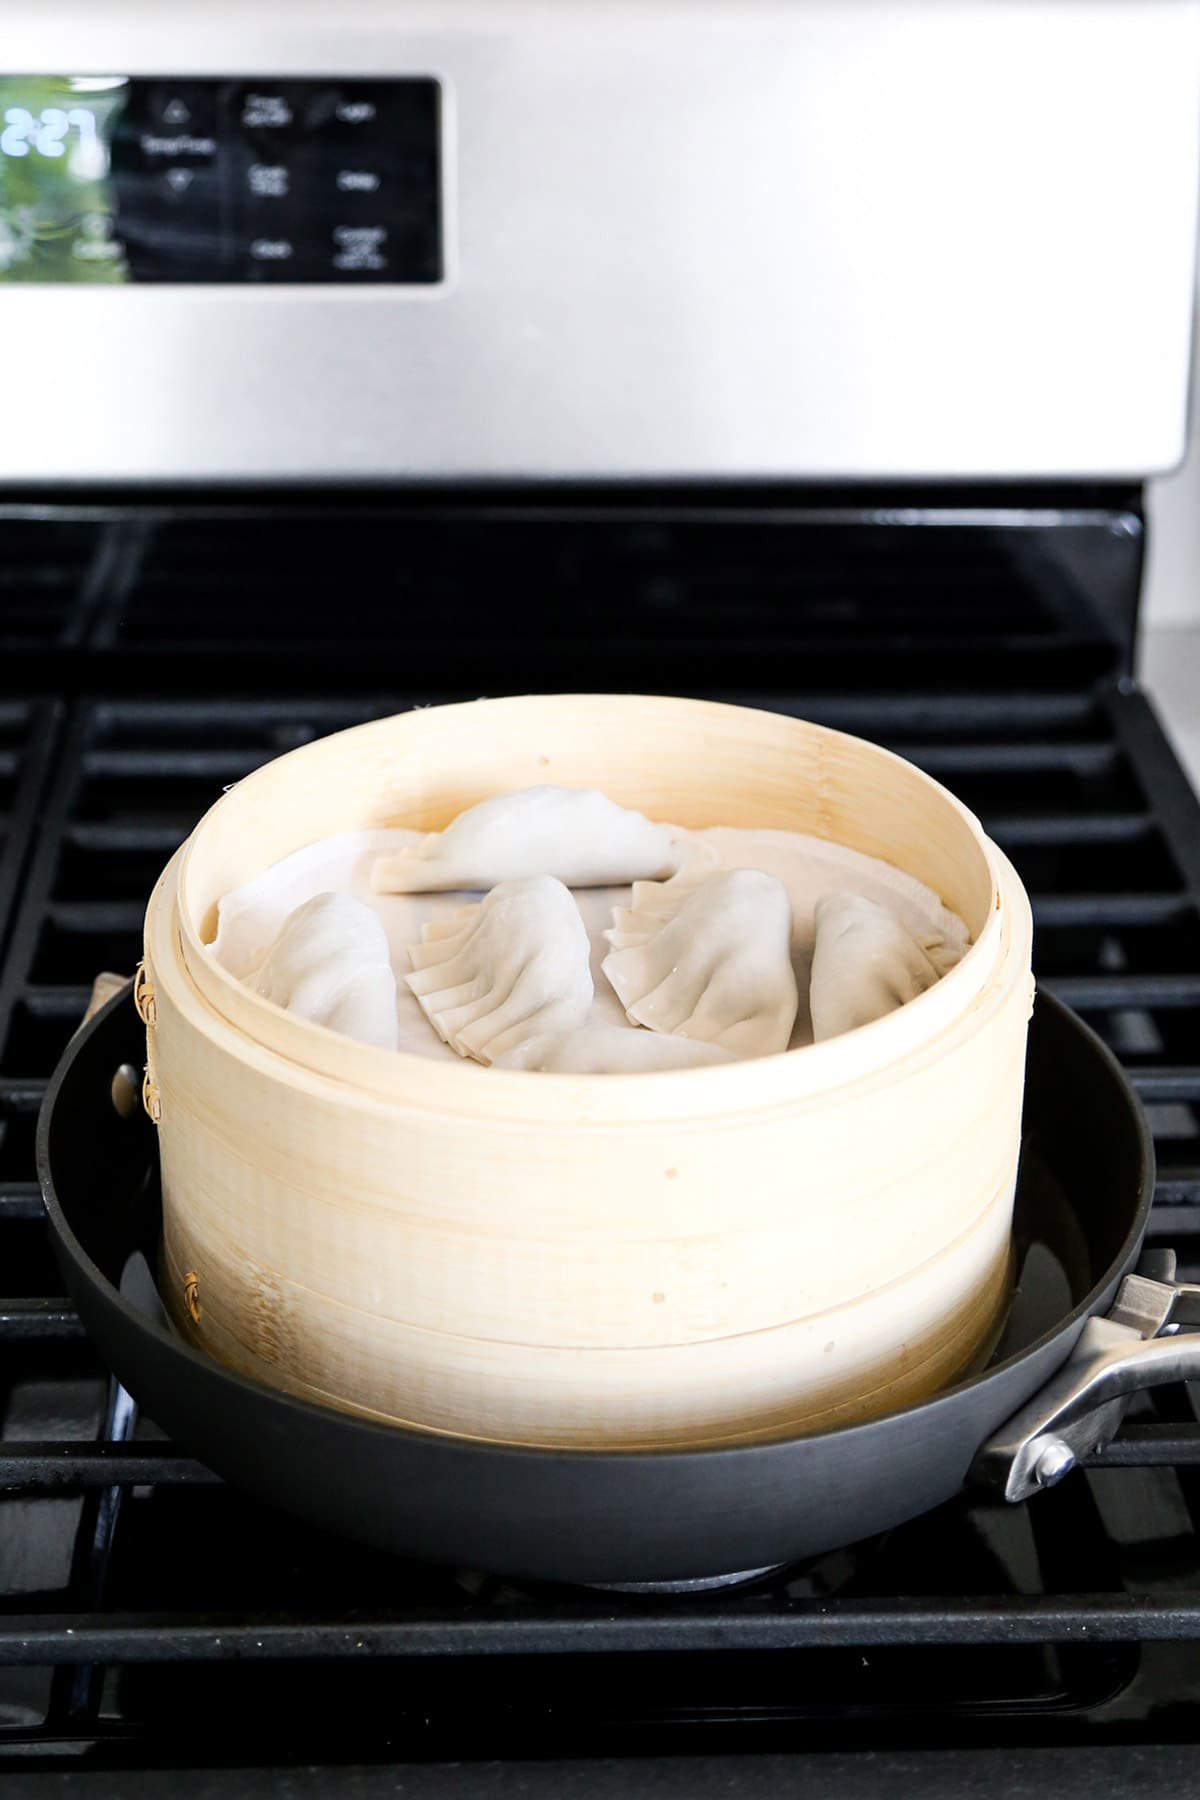 dumplings in bamboo steamer